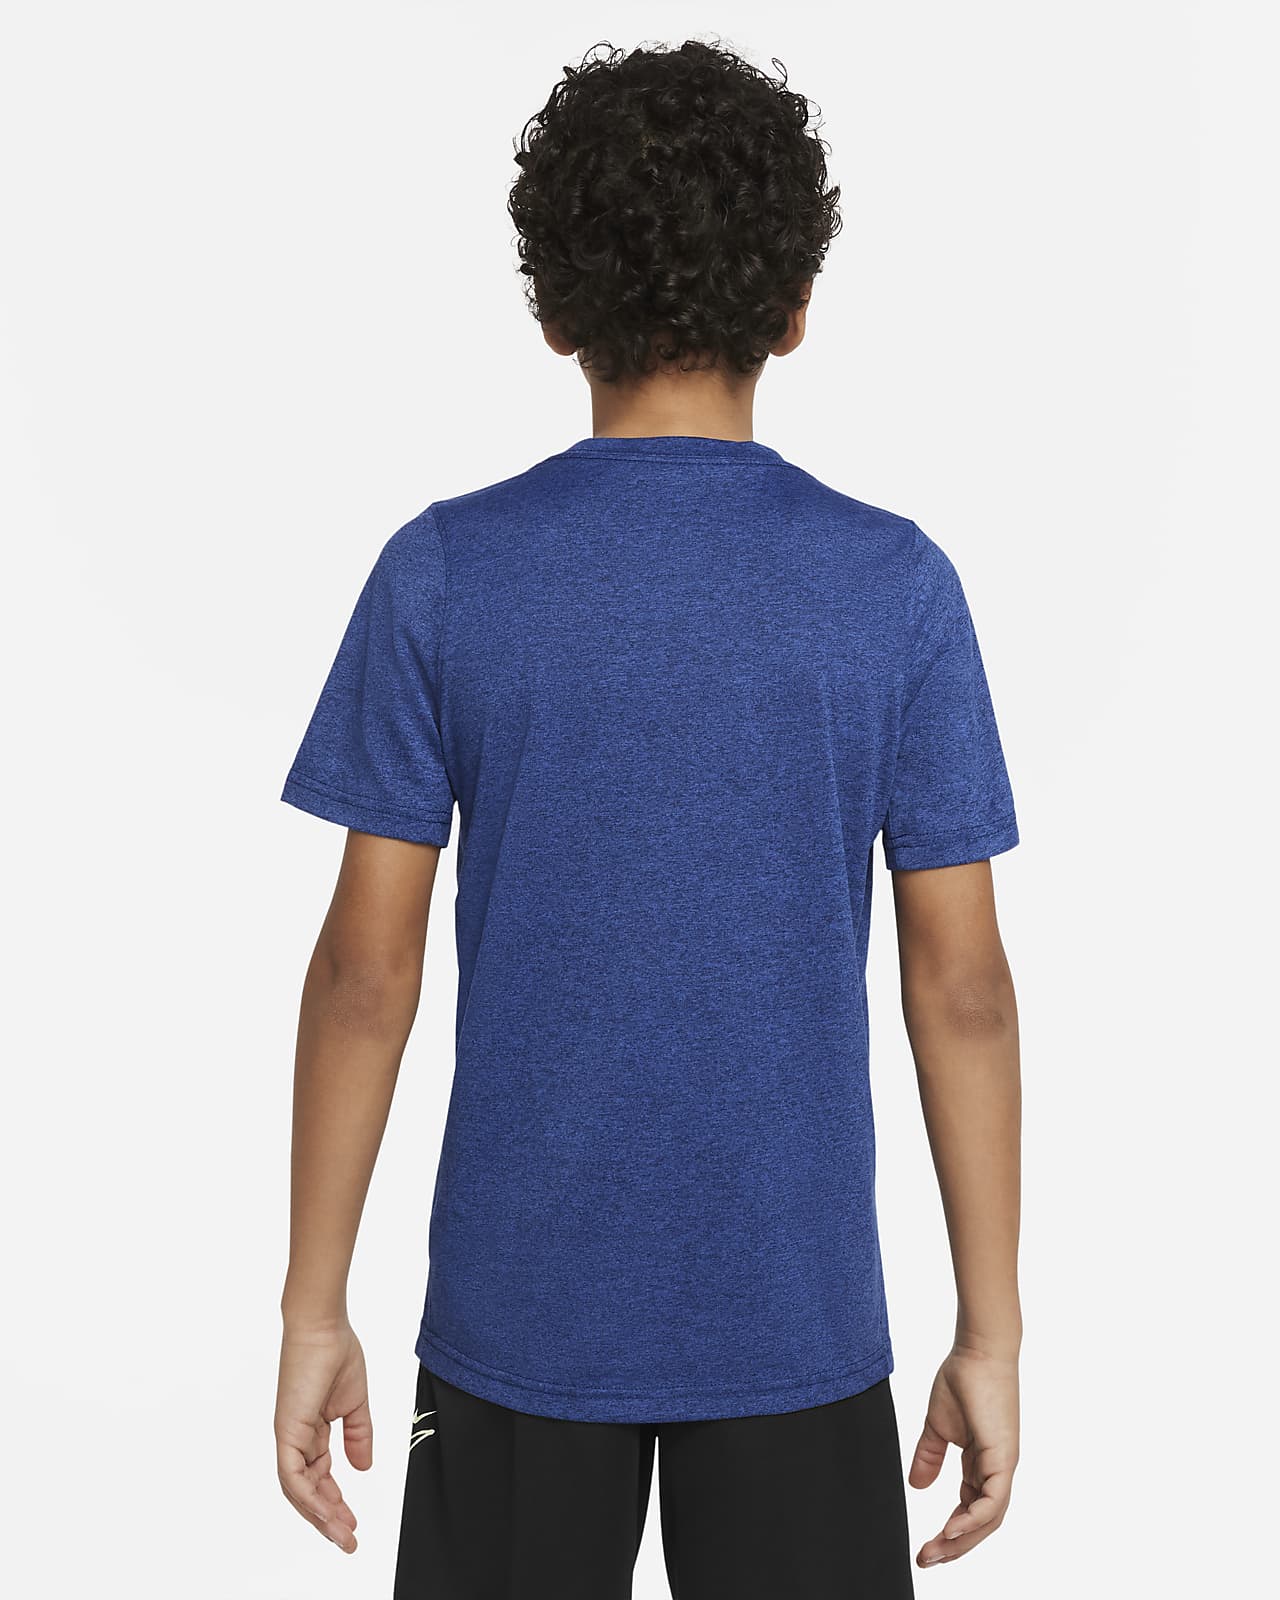 Nike T-Shirt Enfants - Dri-Fit One - coral chalk/sea coral DD7639-611 -  BIKE24